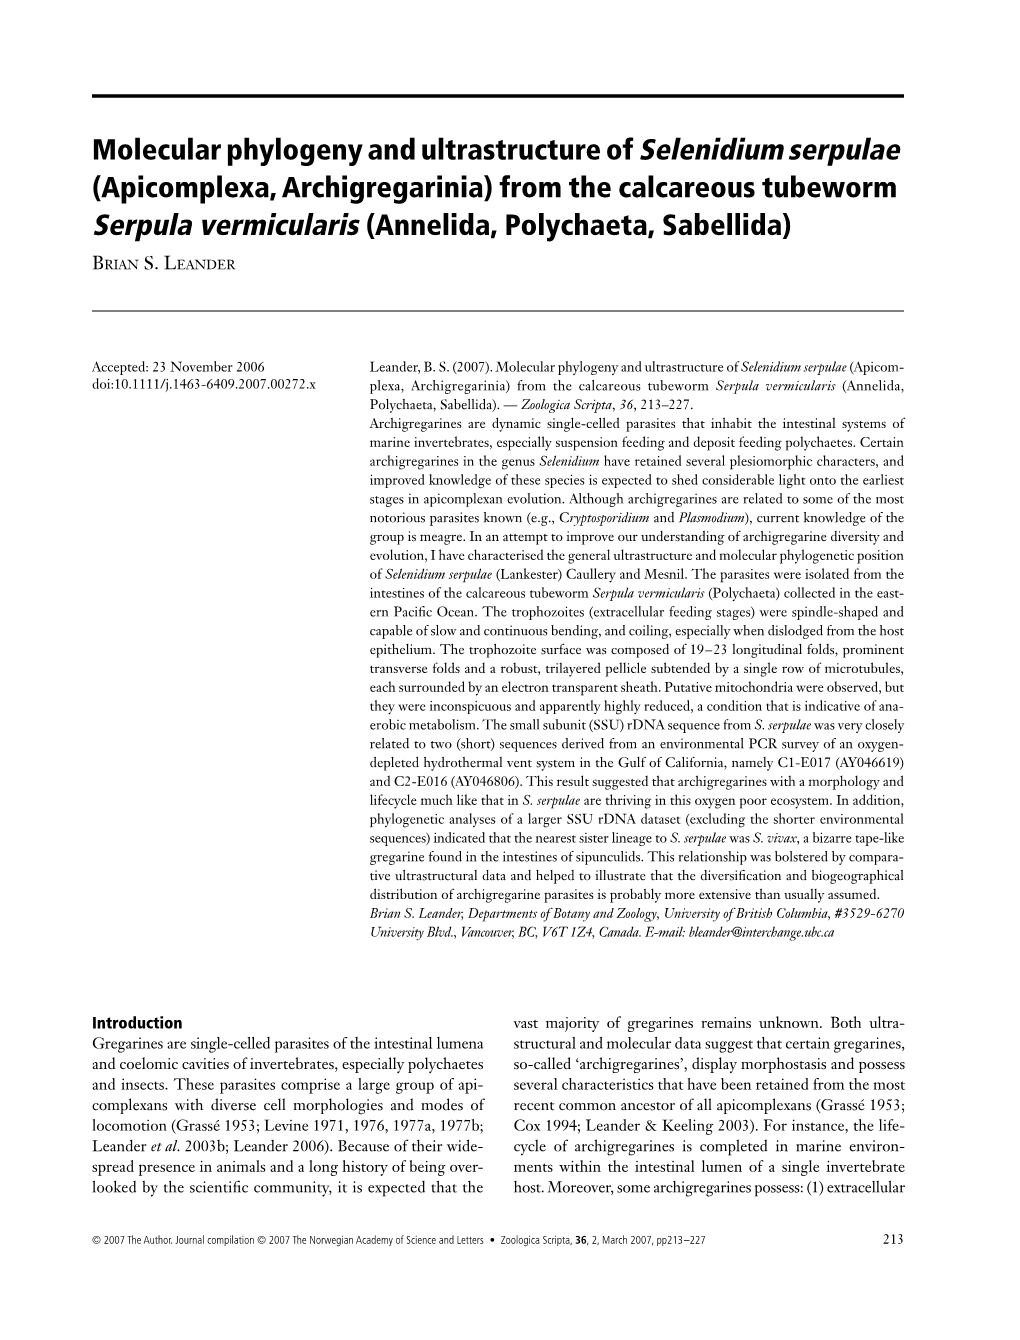 Molecular Phylogeny and Ultrastructure of Selenidium Serpulae